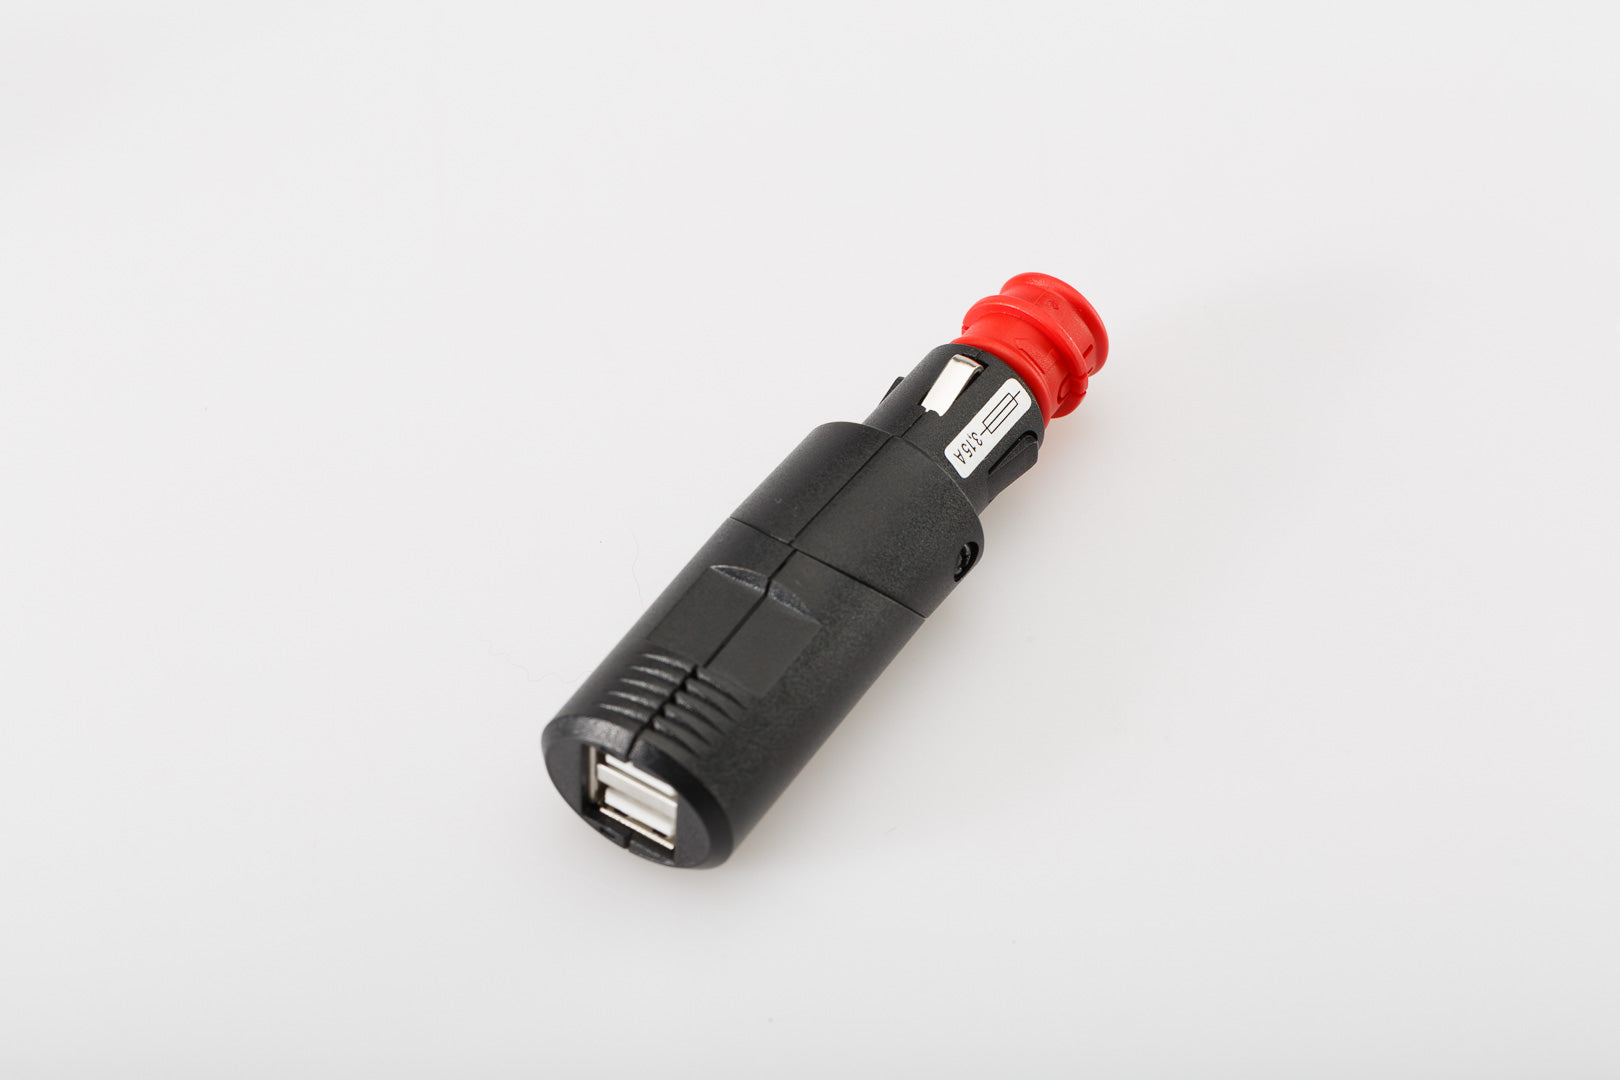 Double USB power port with universal plug For 12V DIN / cigarette lighter socket 2x2100 mA